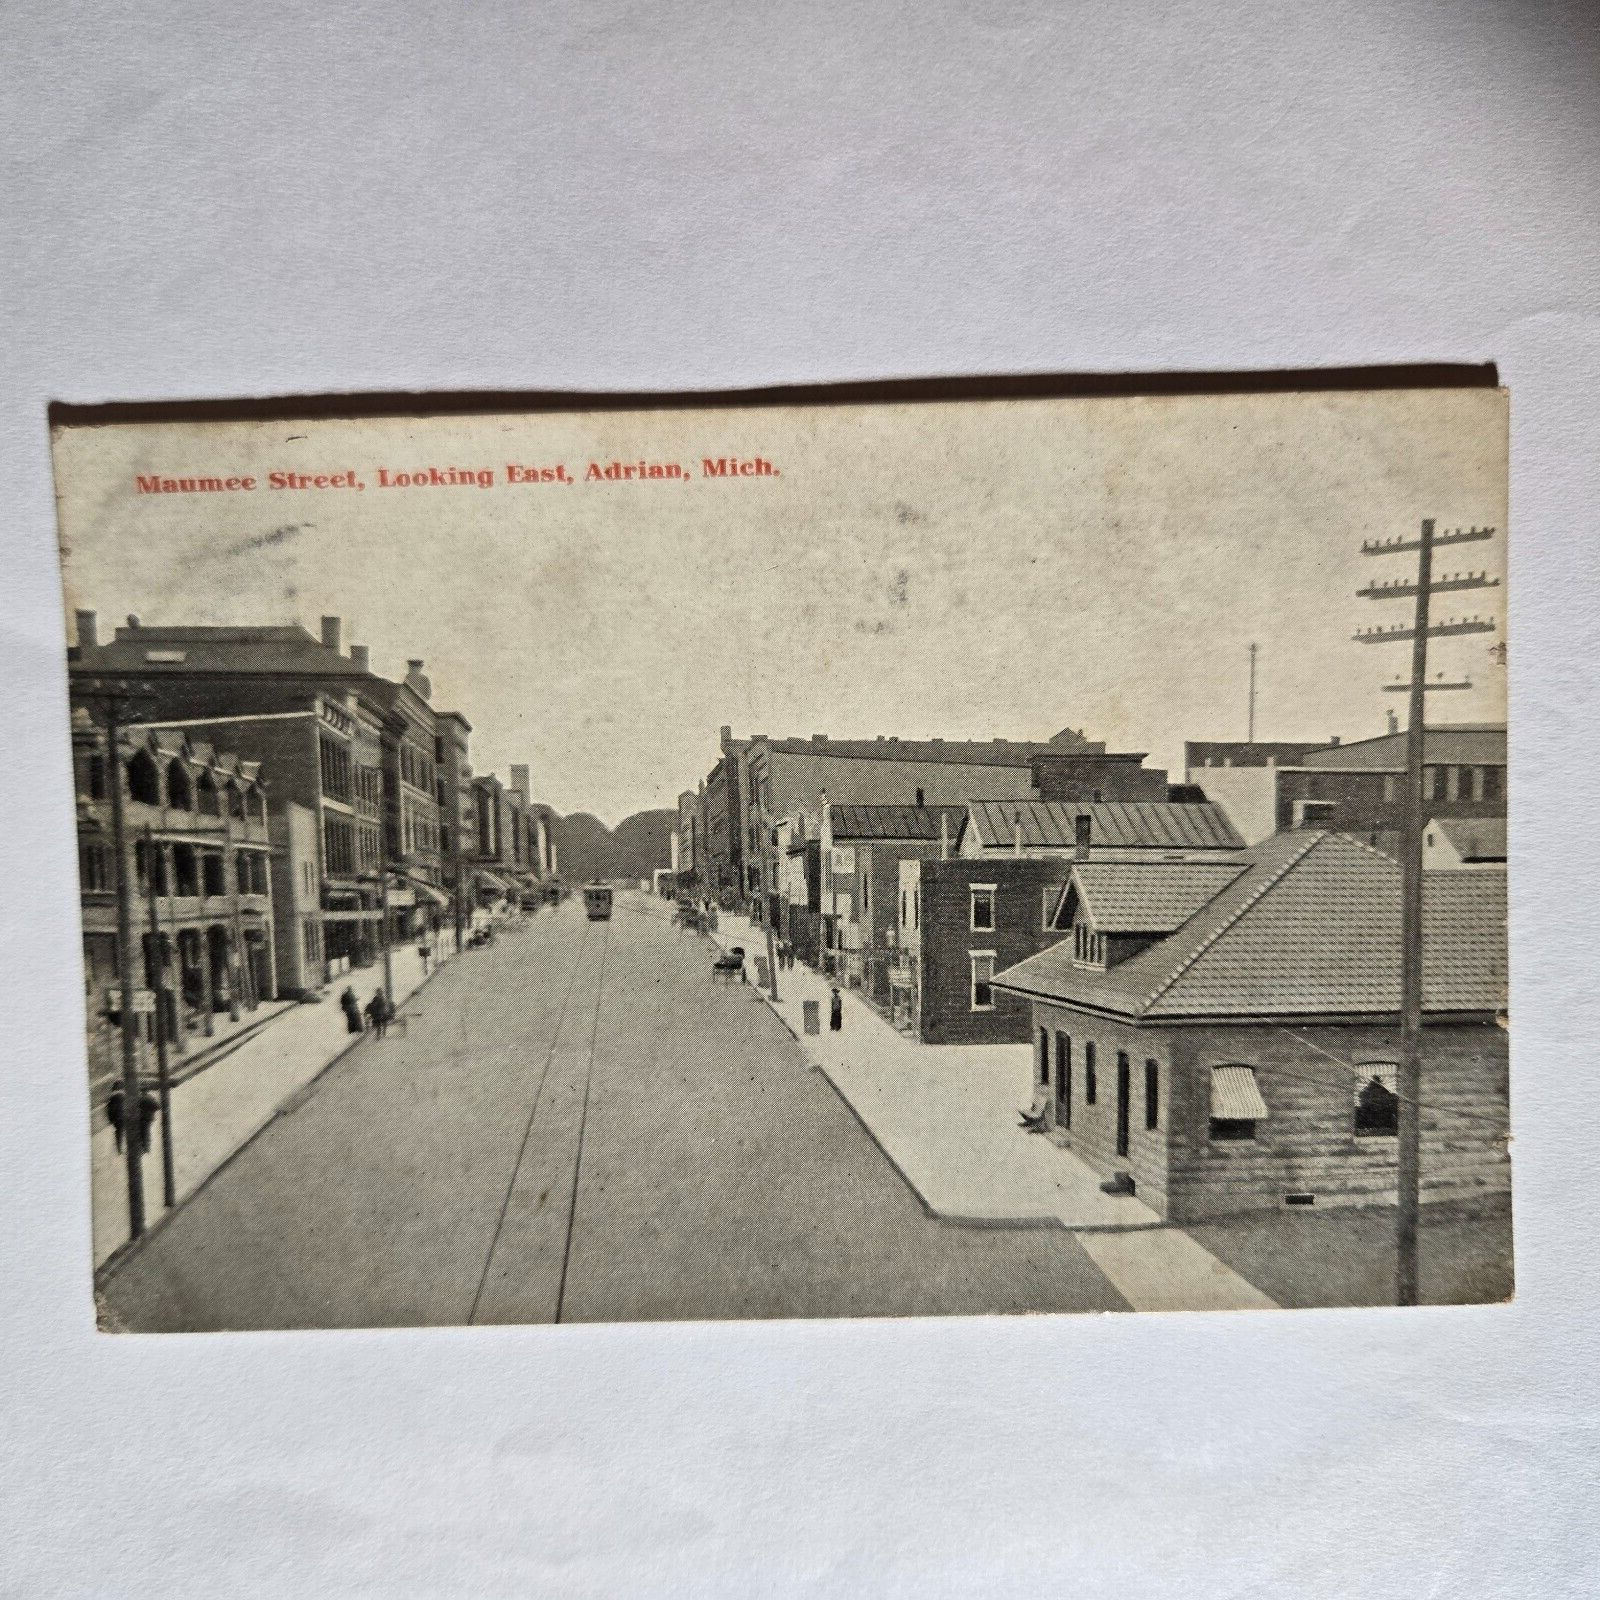 Monroe Street Looking East Adrian MI Postcard 1909 from Adrian w/ flag cancel